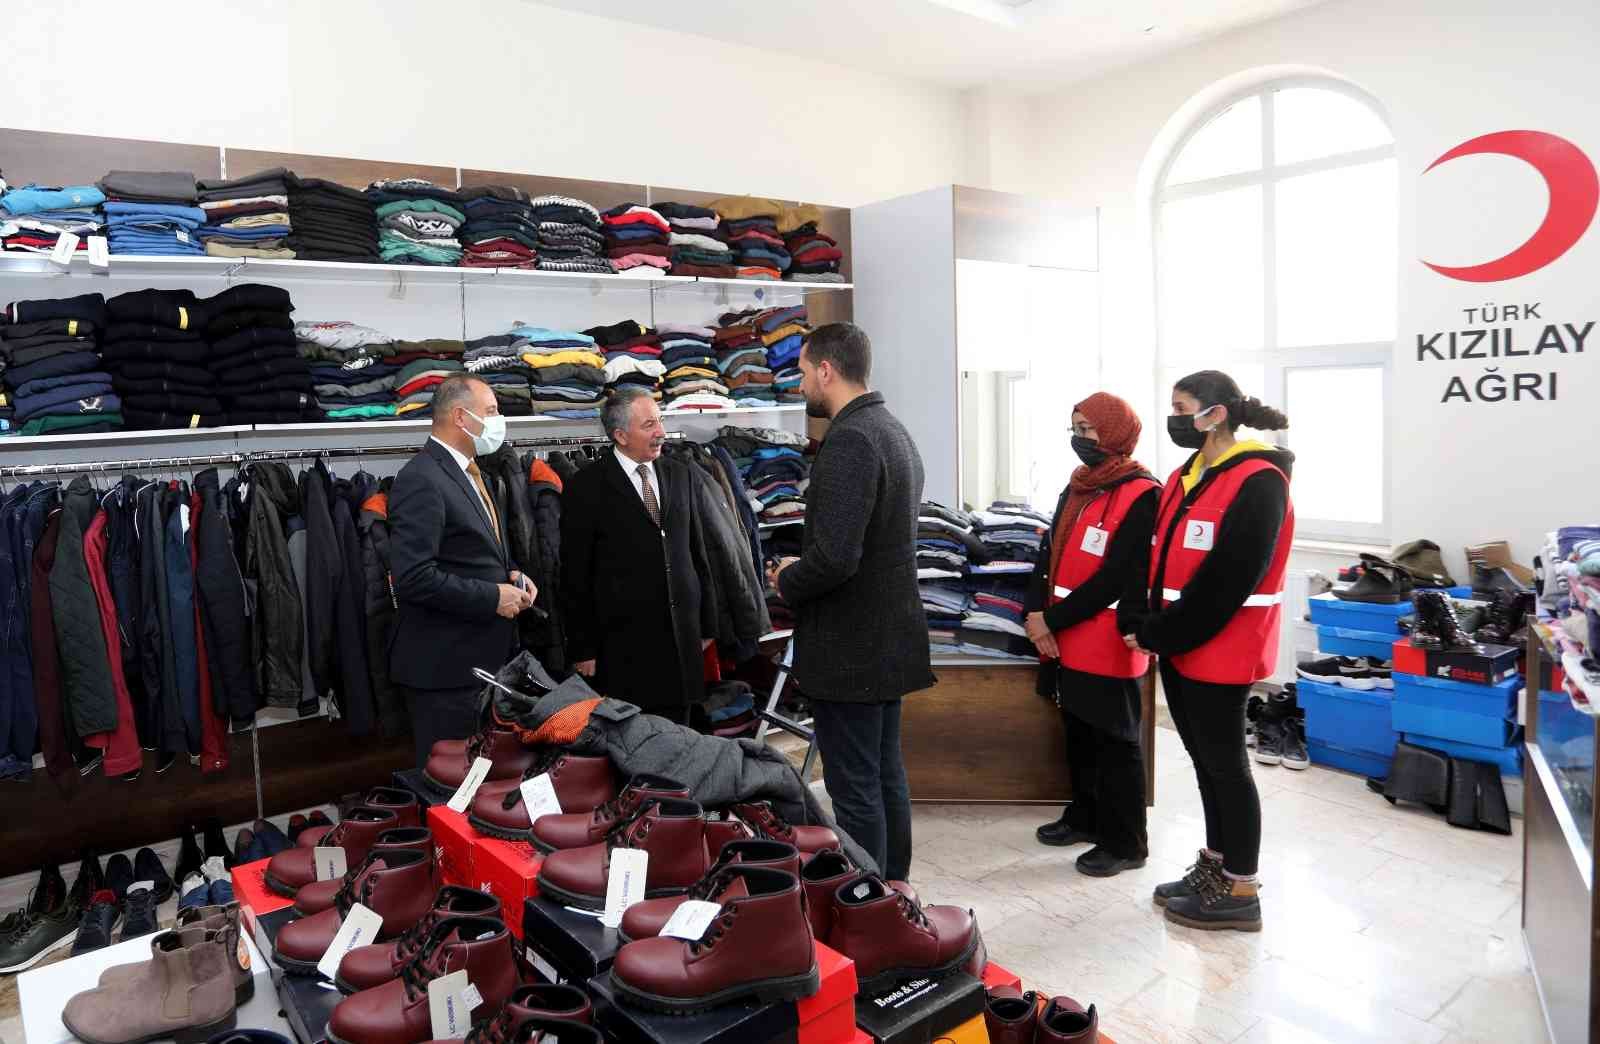 AİÇÜ Rektörü Prof. Dr. Karabulut kızılay giyim mağazasını ziyaret etti #agri